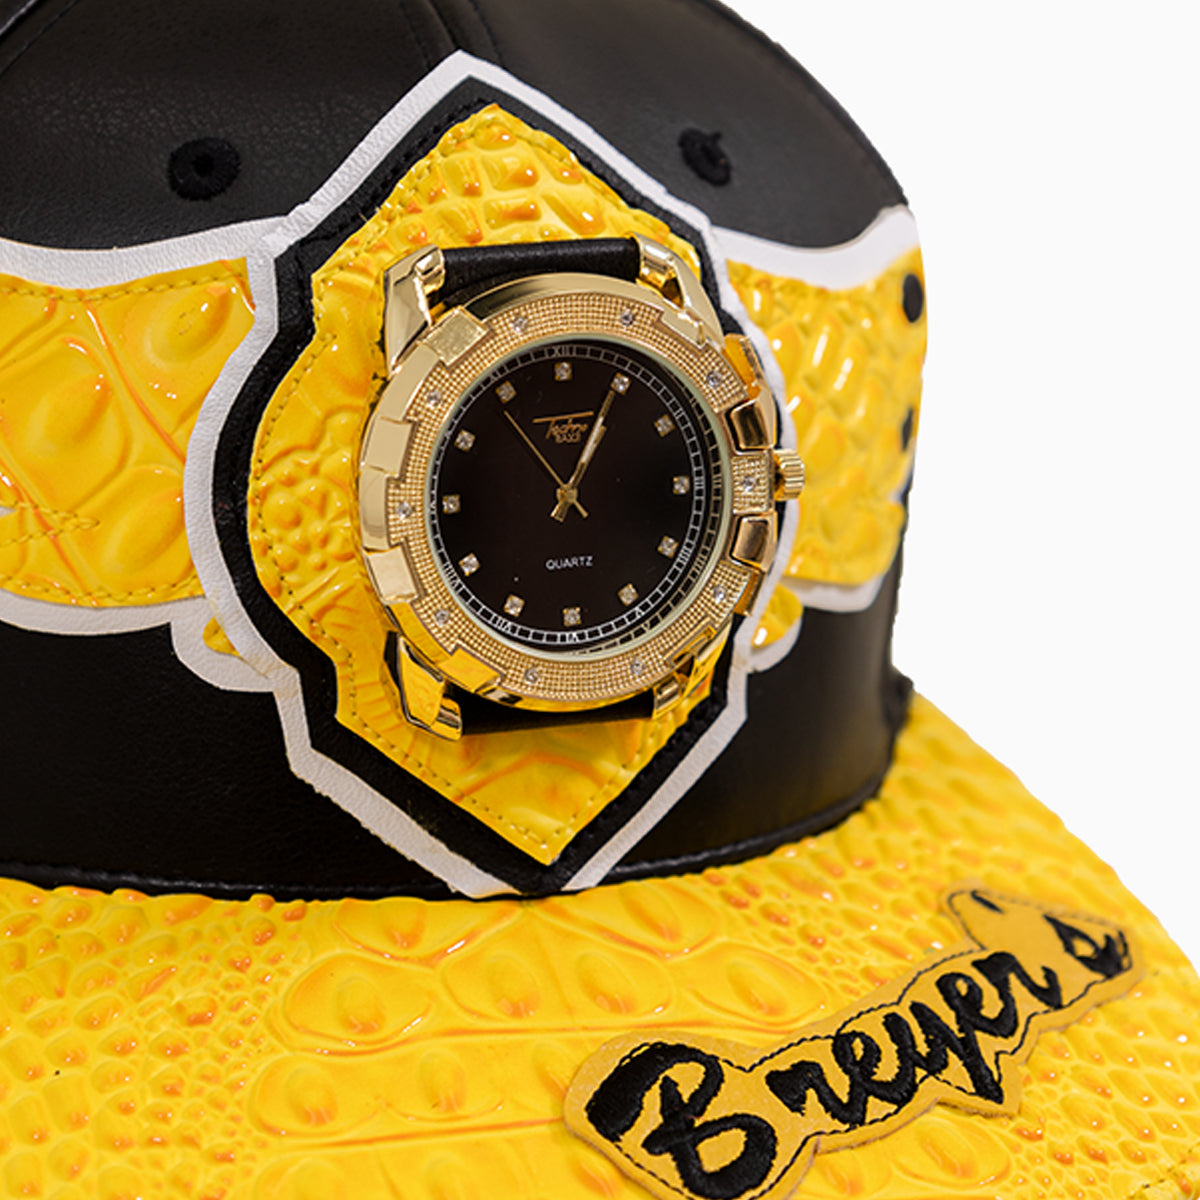 breyers-buck-50-leather-pattern-logo-hat-breyers-lwlgh-bl-yw